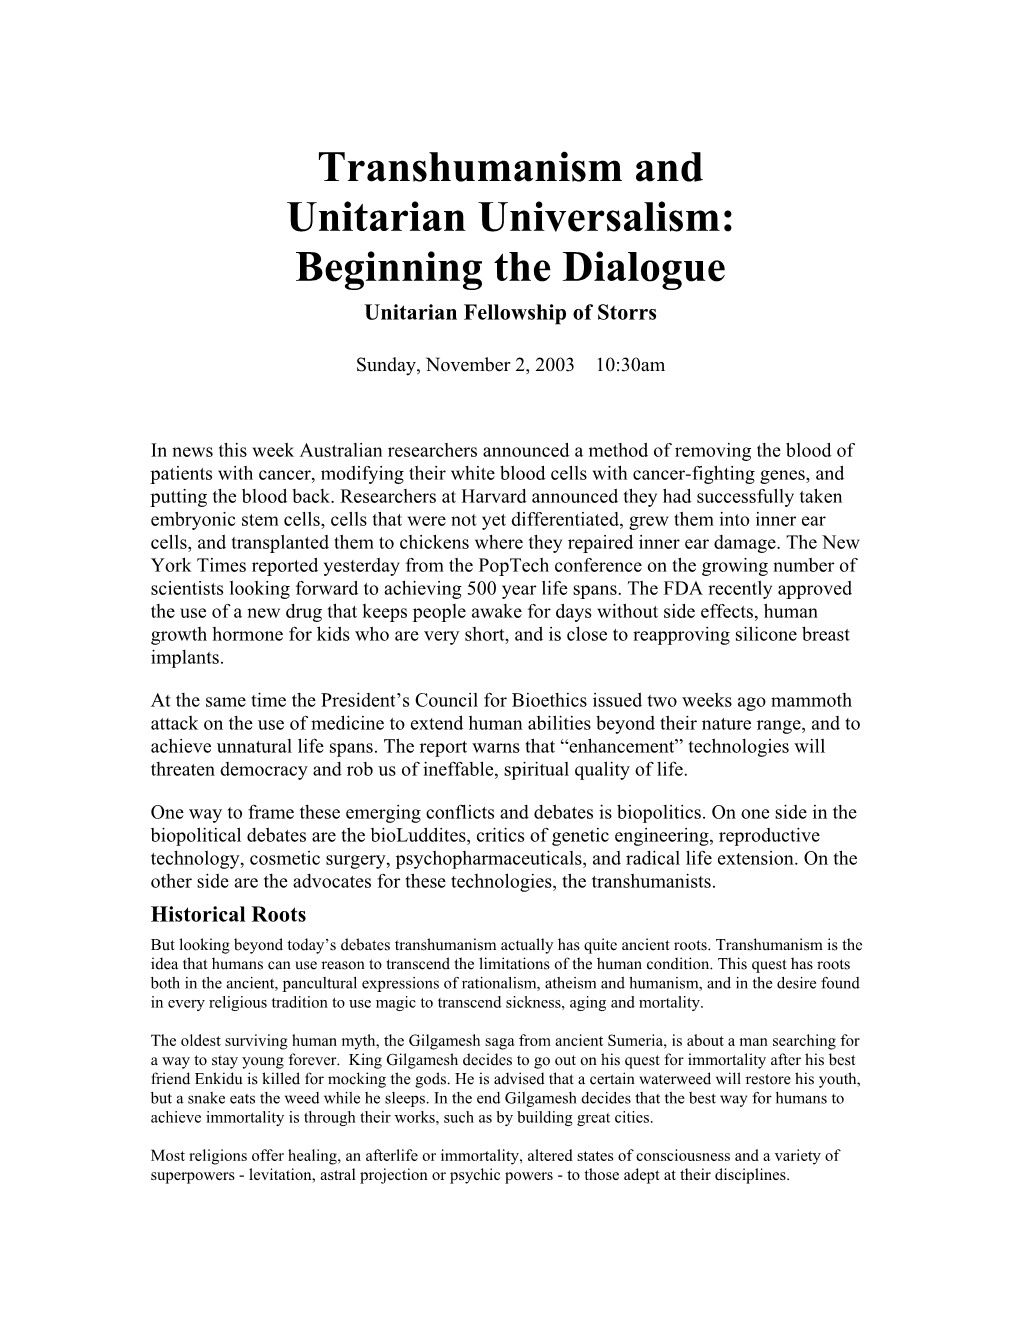 Transhumanism and Unitarian Universalism: Beginning the Dialogue Unitarian Fellowship of Storrs